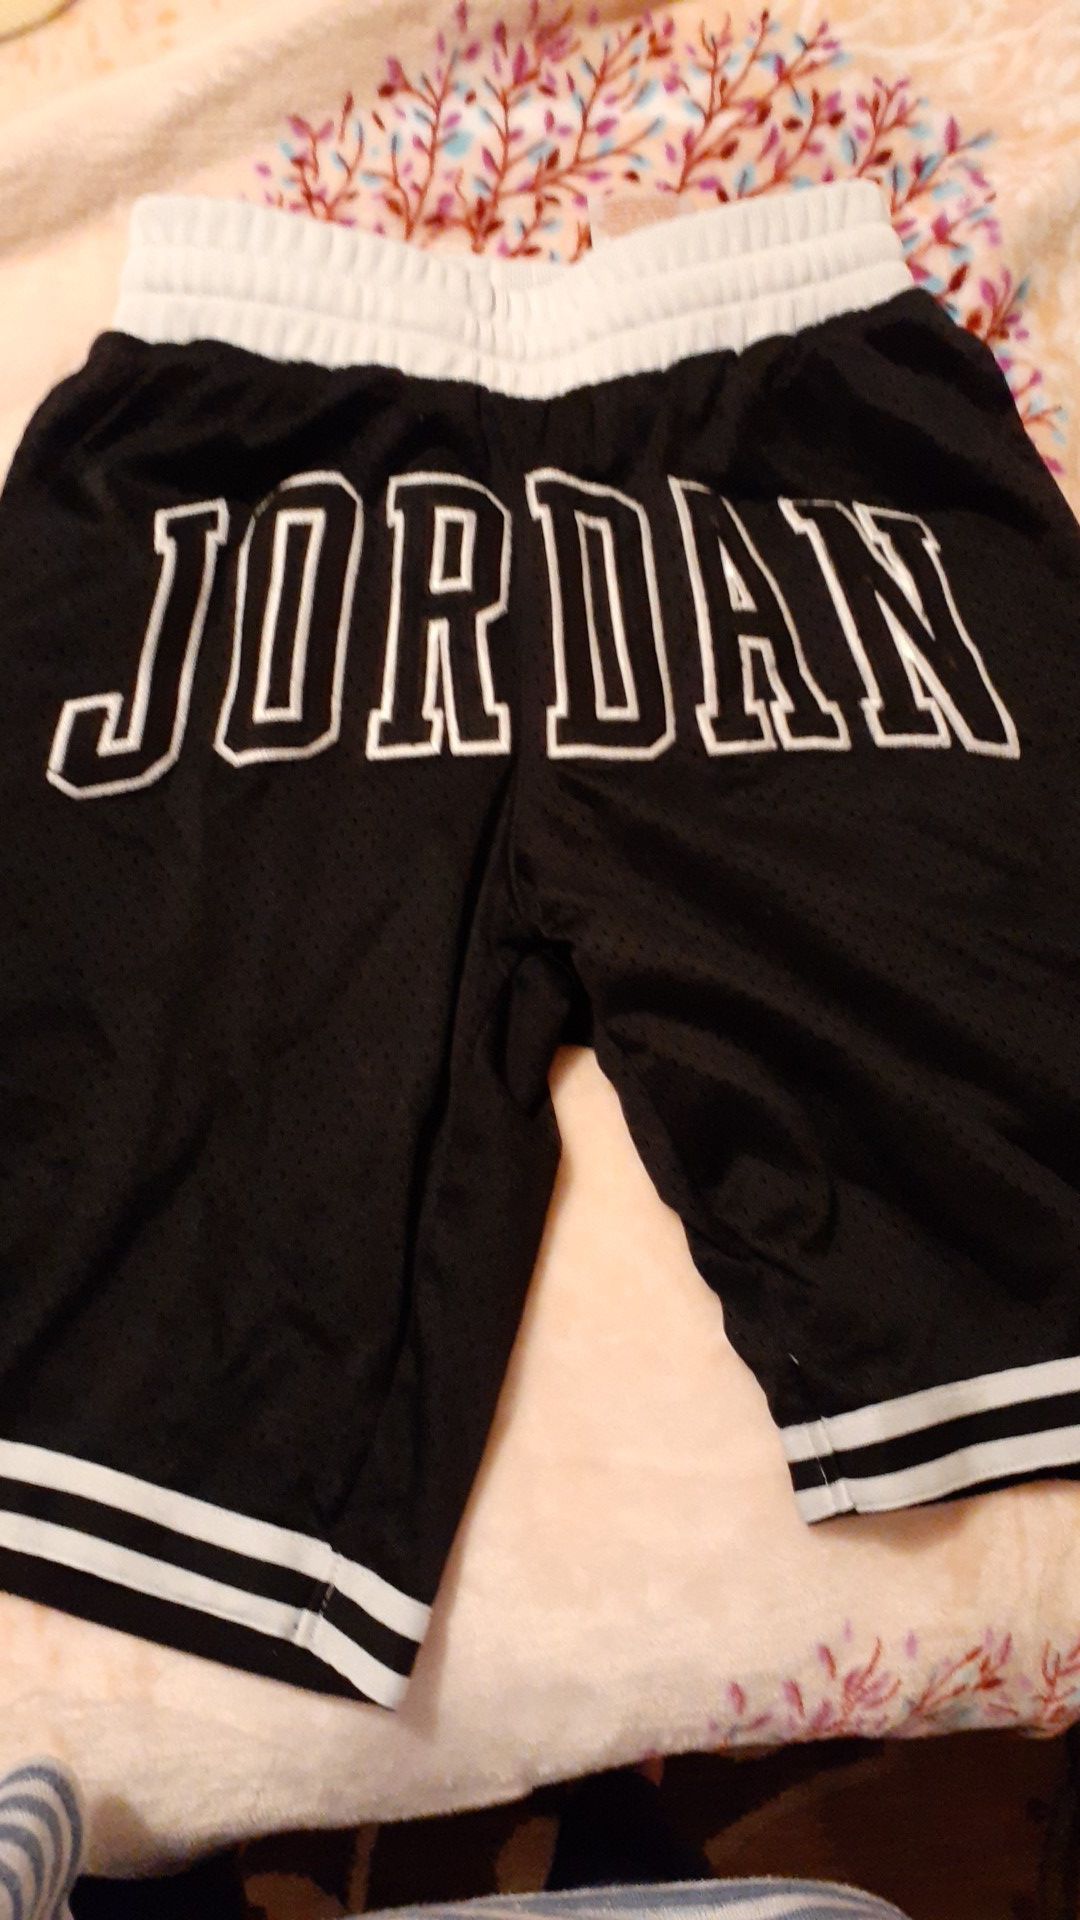 Nike Jordan's shorts